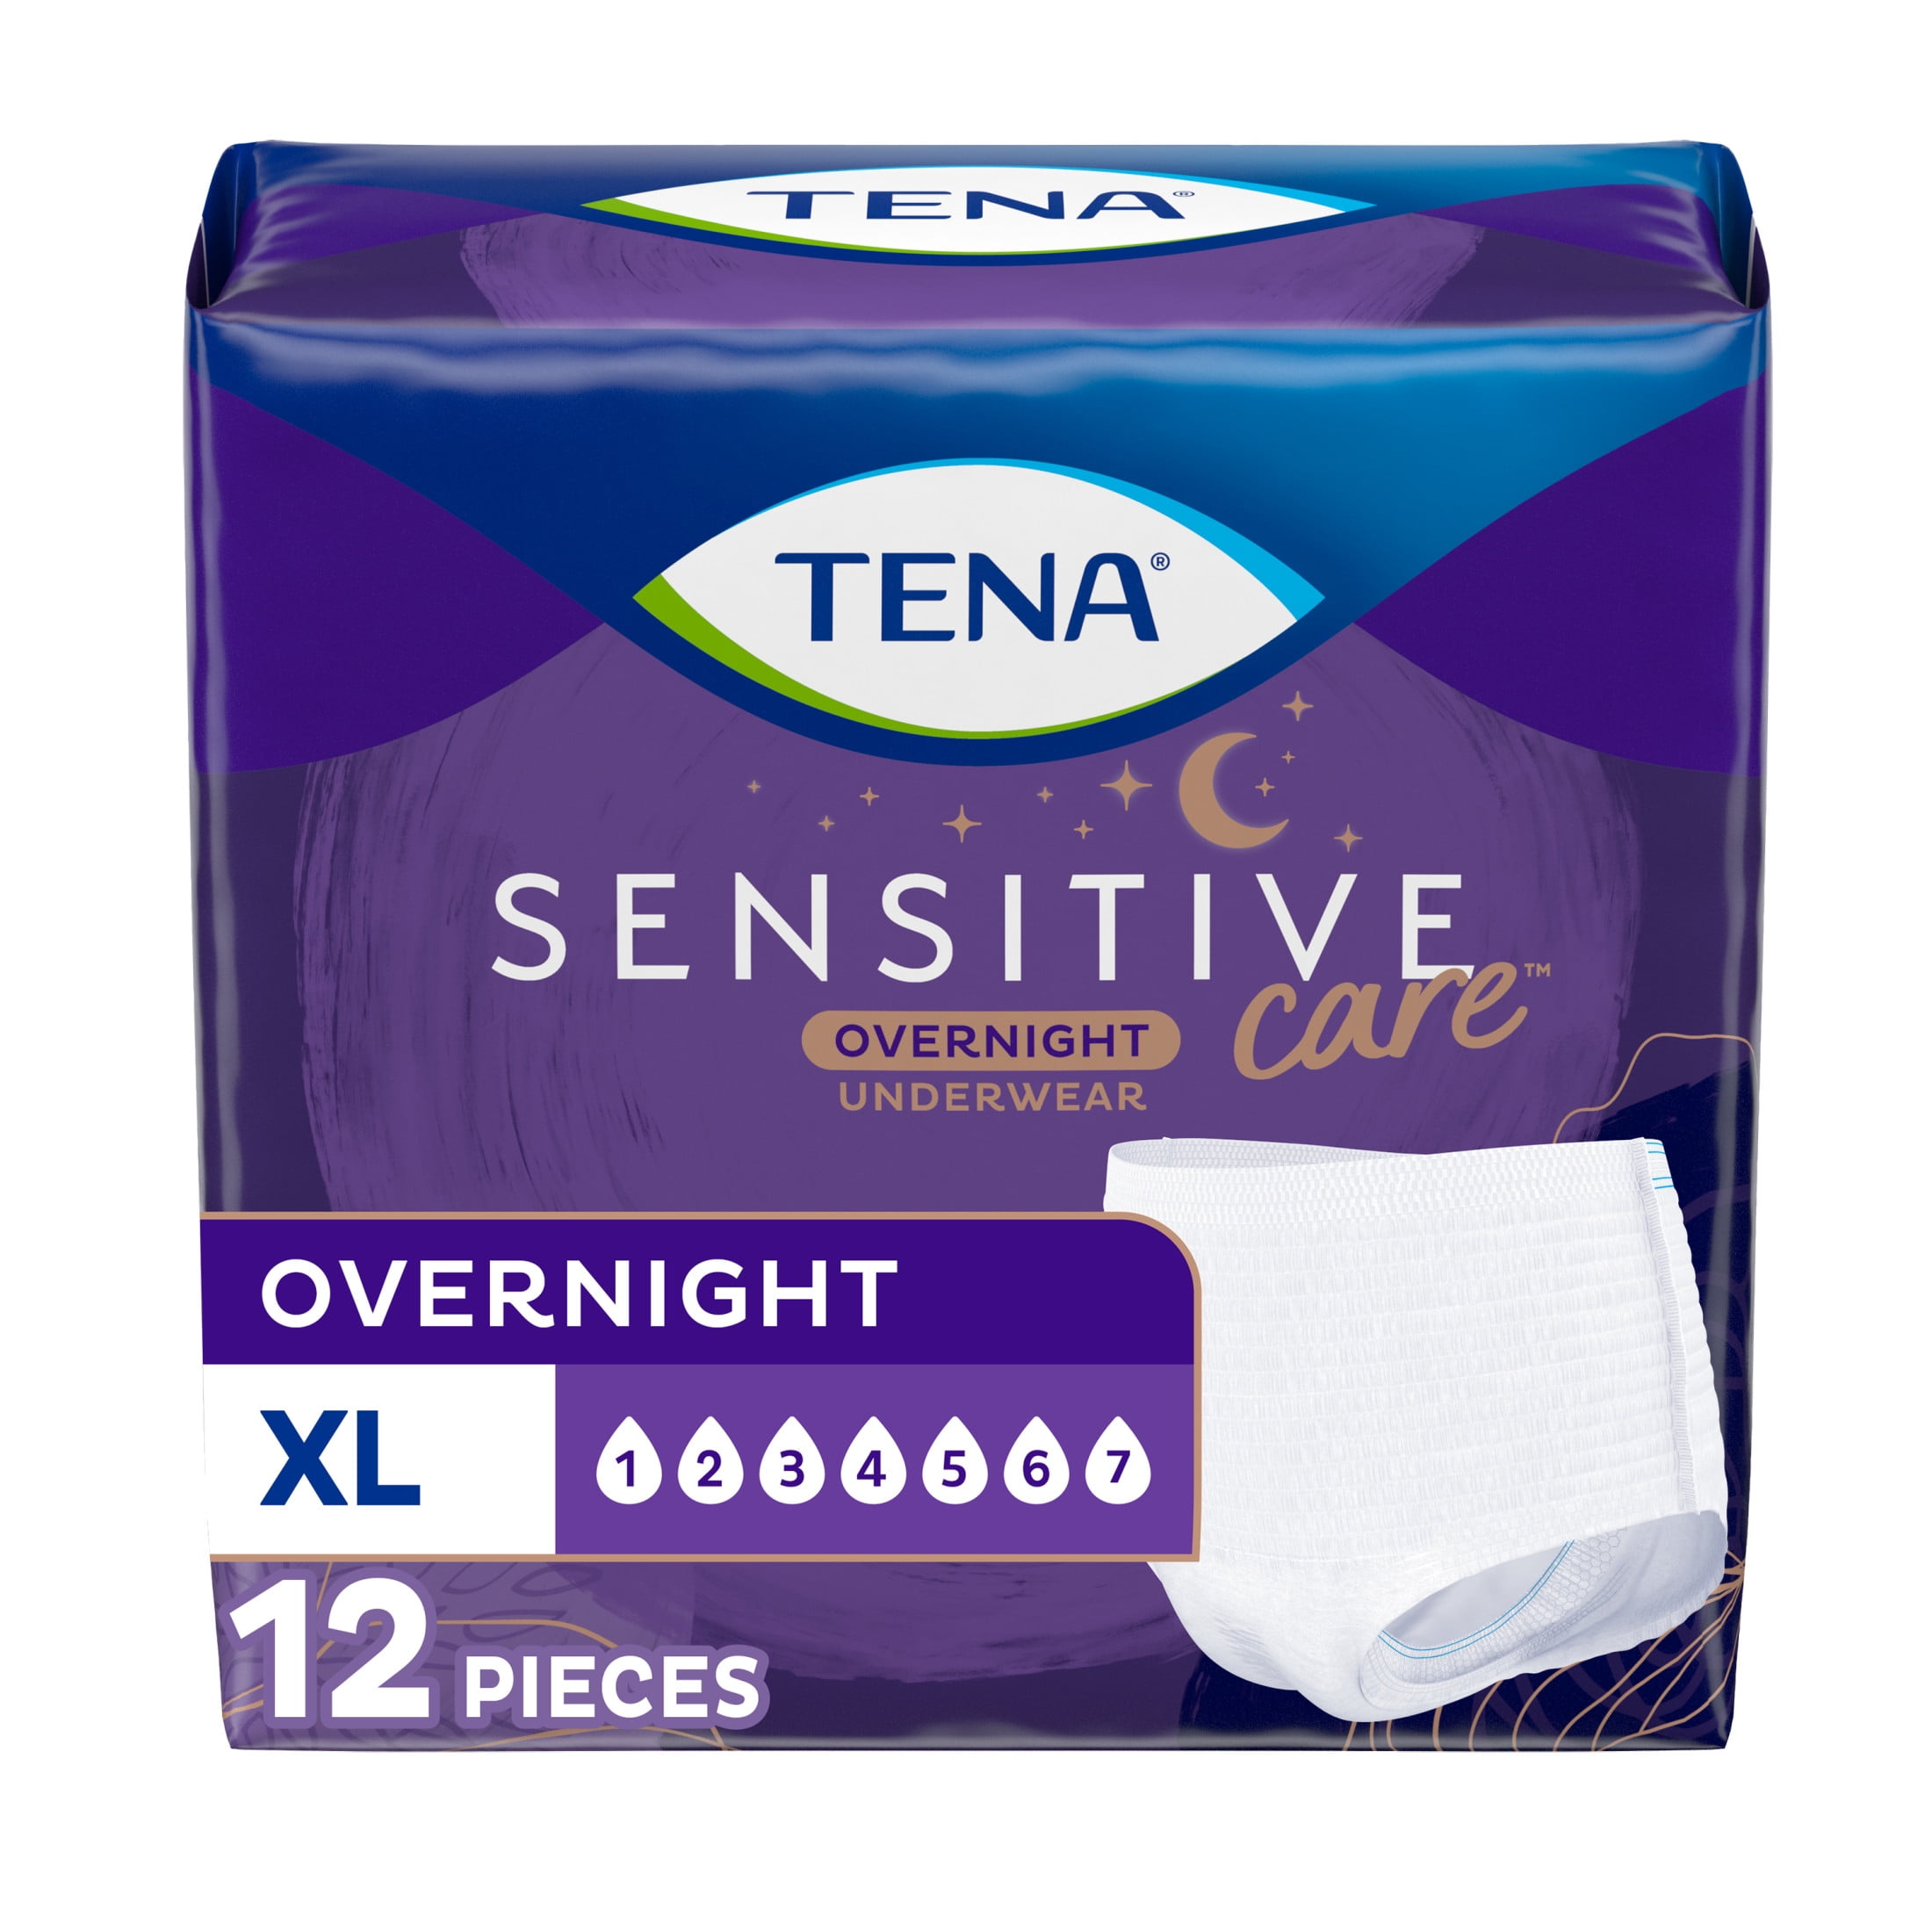 TENA Sensitive Care Extra Coverage Overnight pads